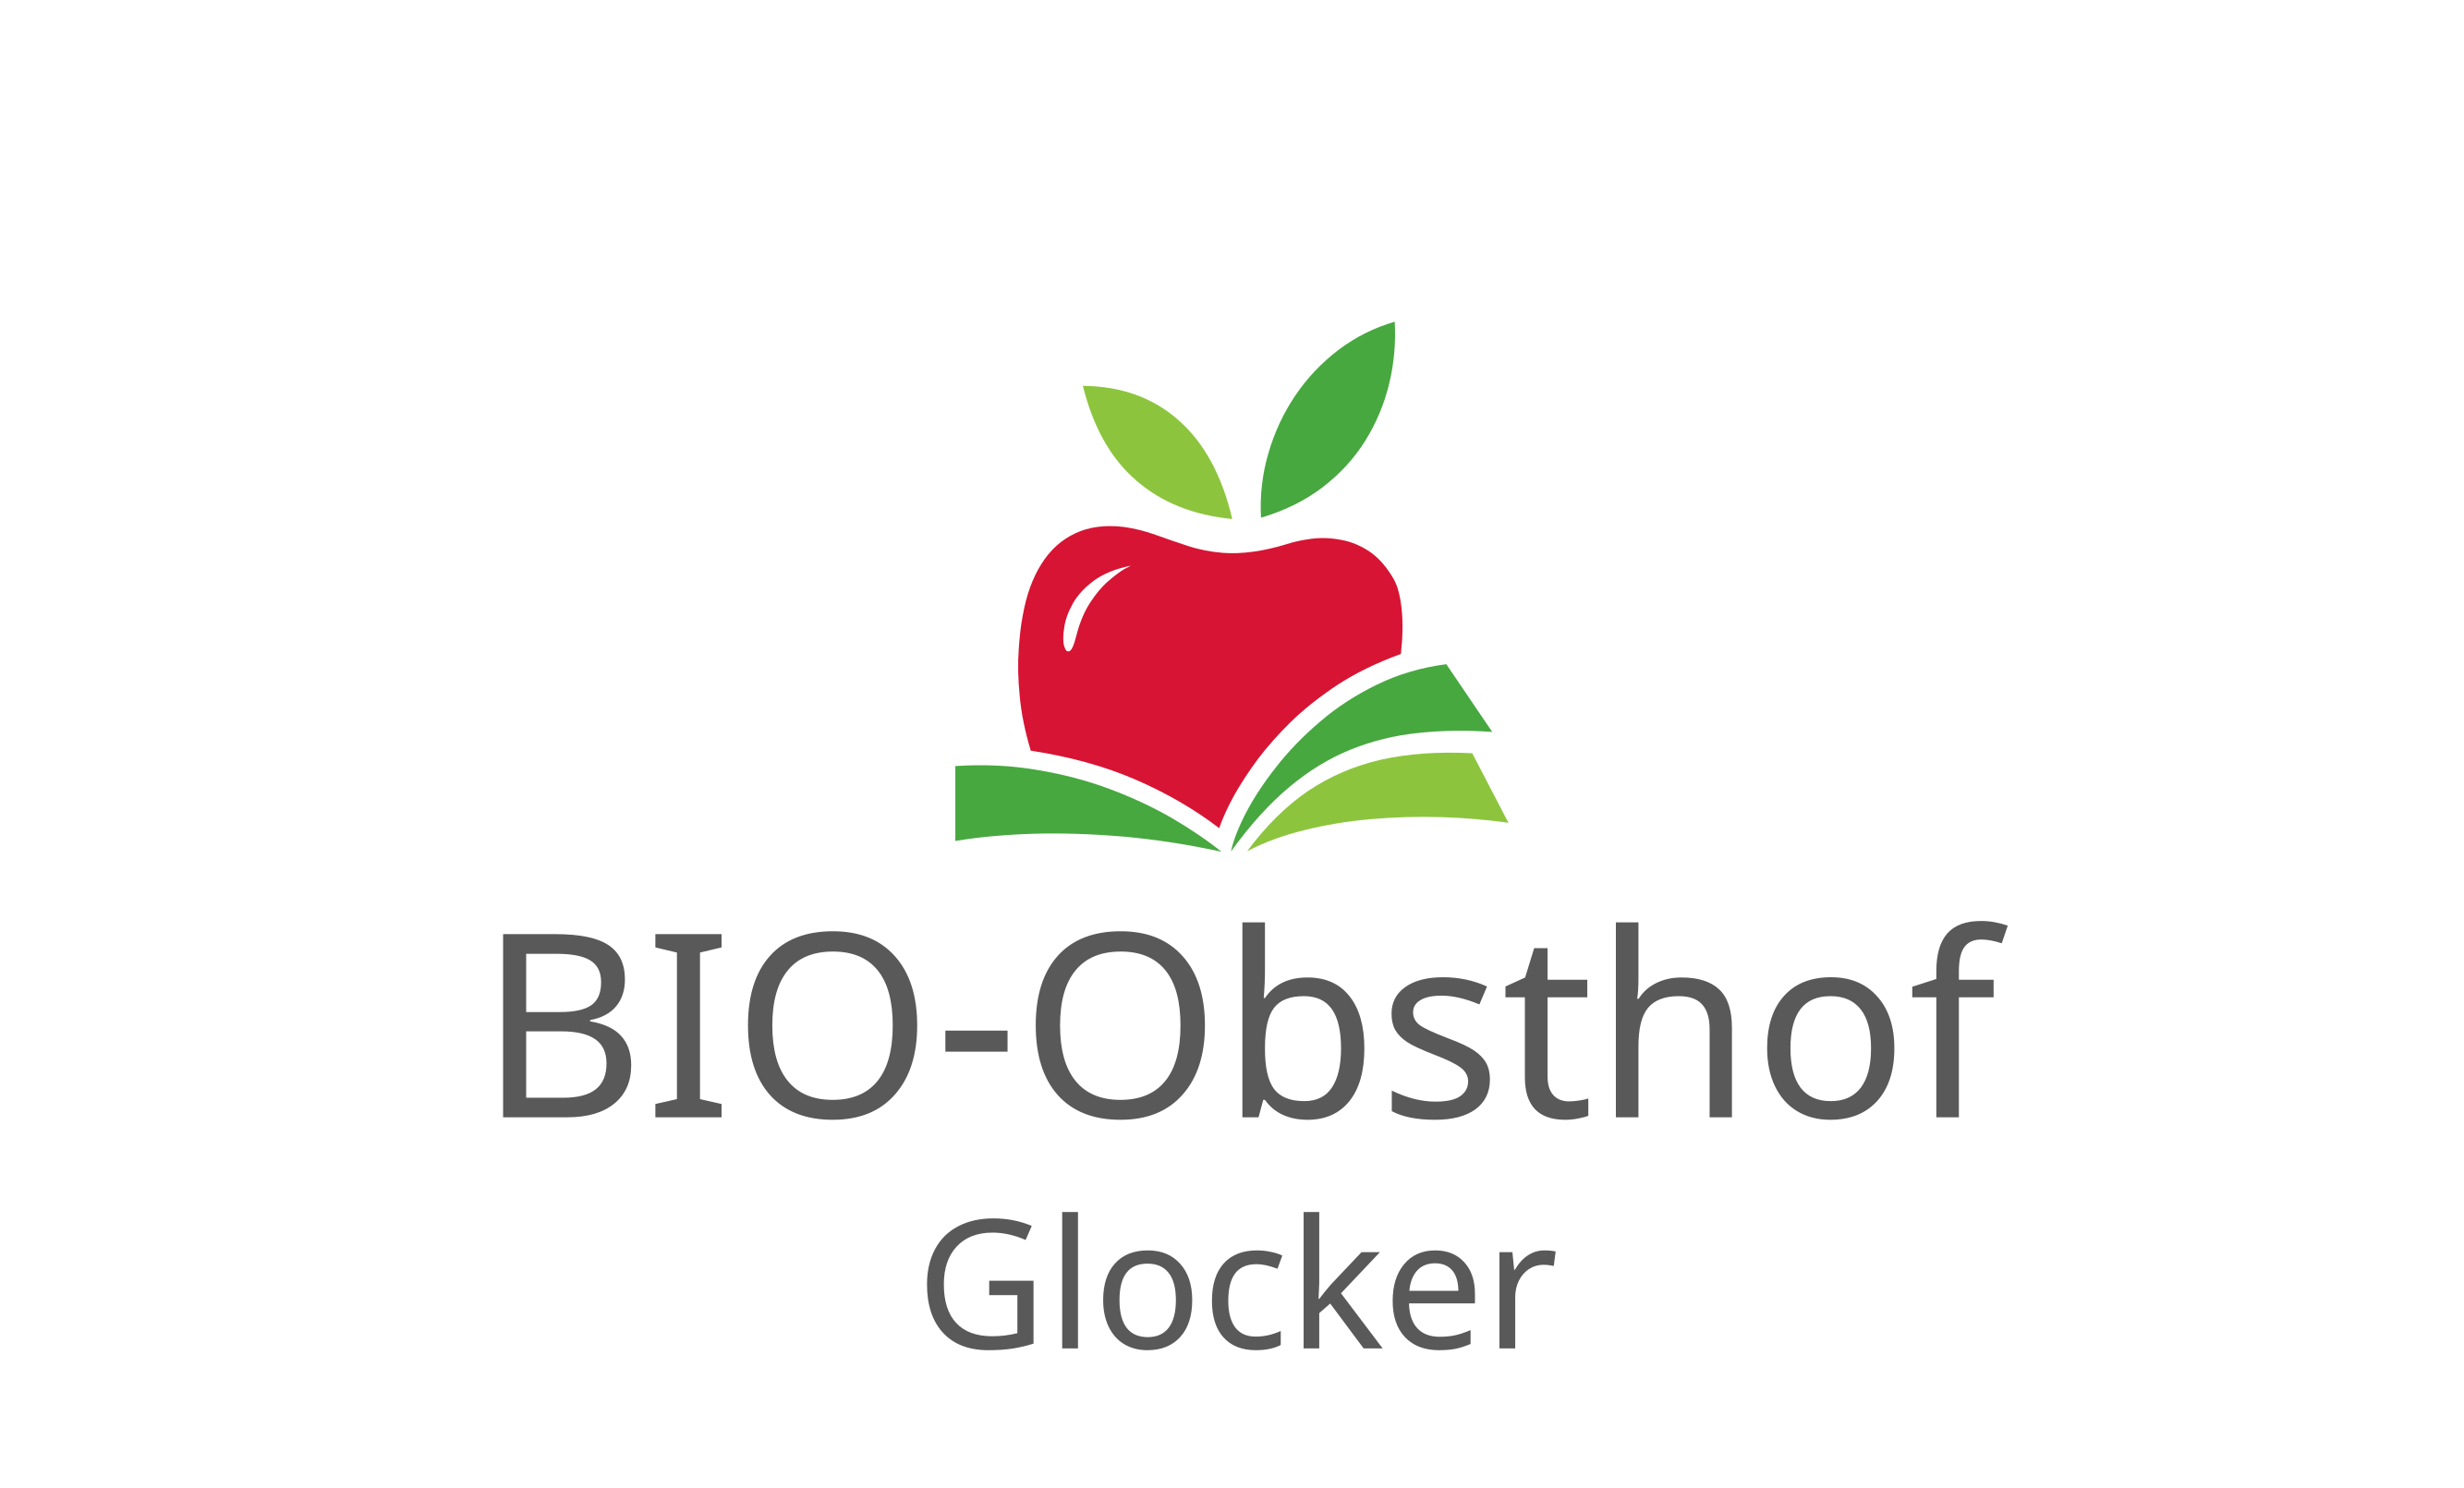 Bio-Obsthof Glocker